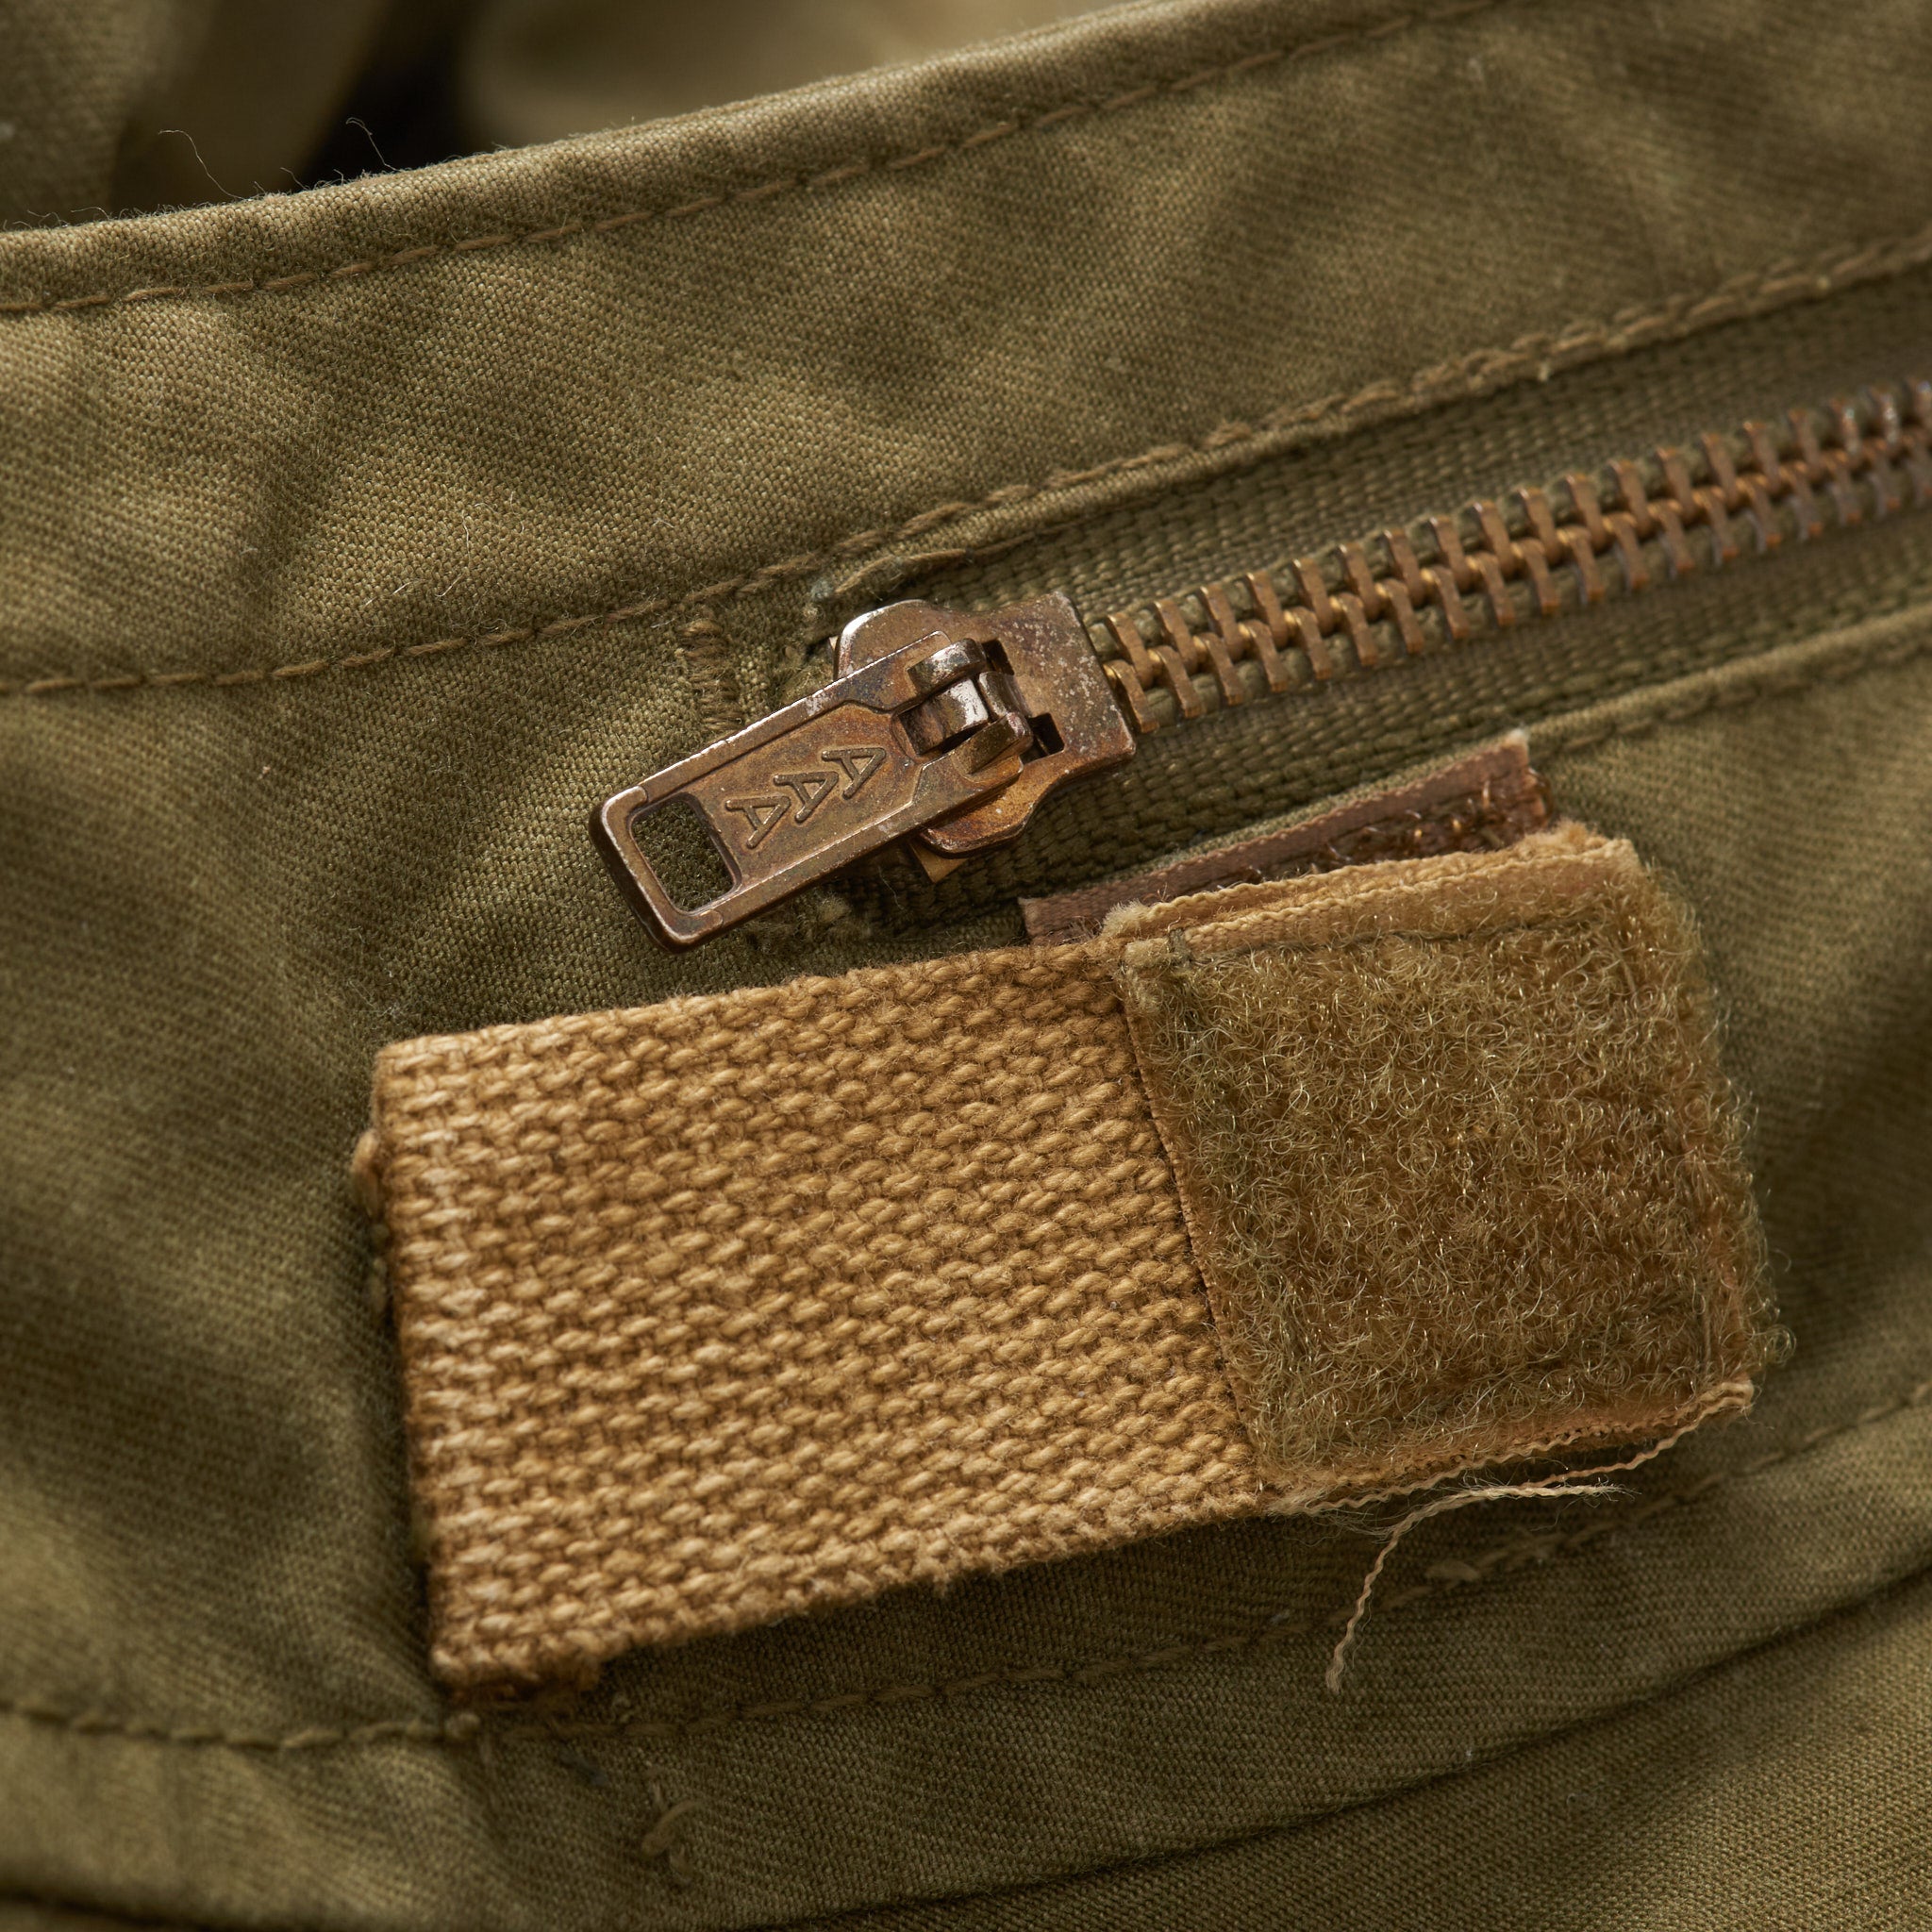 Vintage ALPHA INDUSTRIES M-65 Olive Cotton Military Field Jacket Size M ALPHA INDUSTRIES